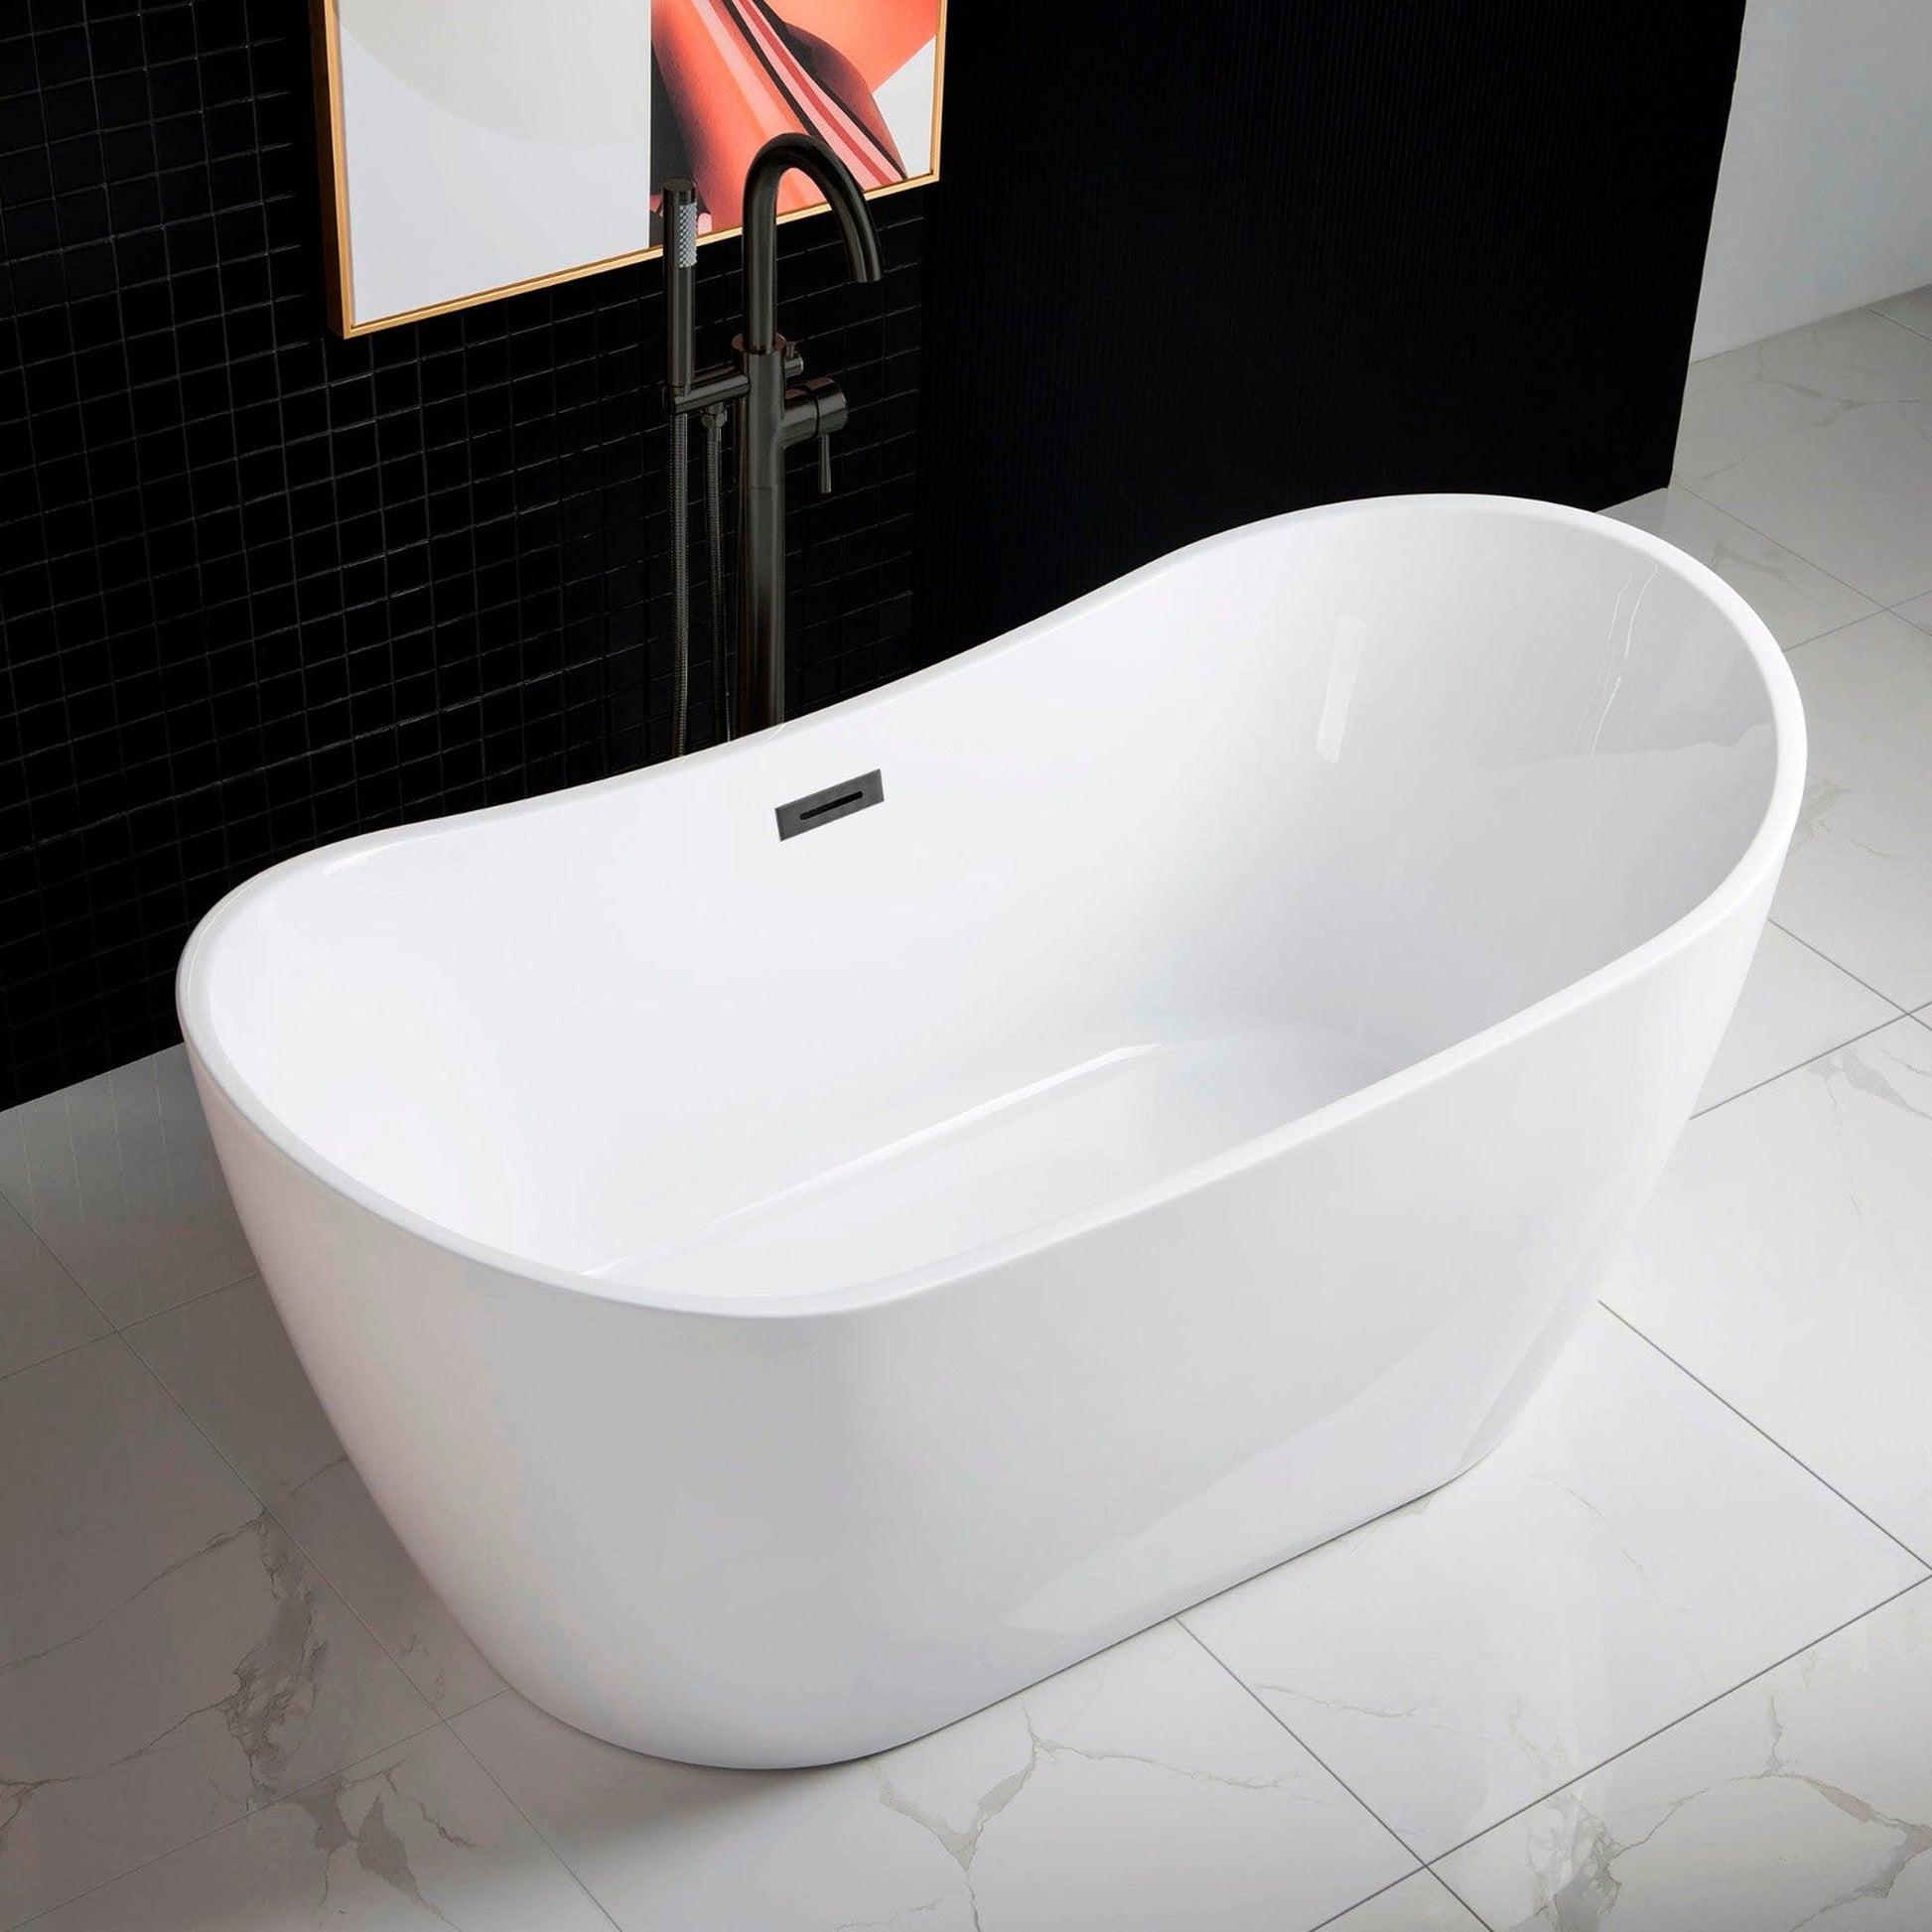 WoodBridge B0016 59" White Acrylic Freestanding Soaking Bathtub With Matte Black Drain, Overflow, F0072MBVT Tub Filler and Caddy Tray